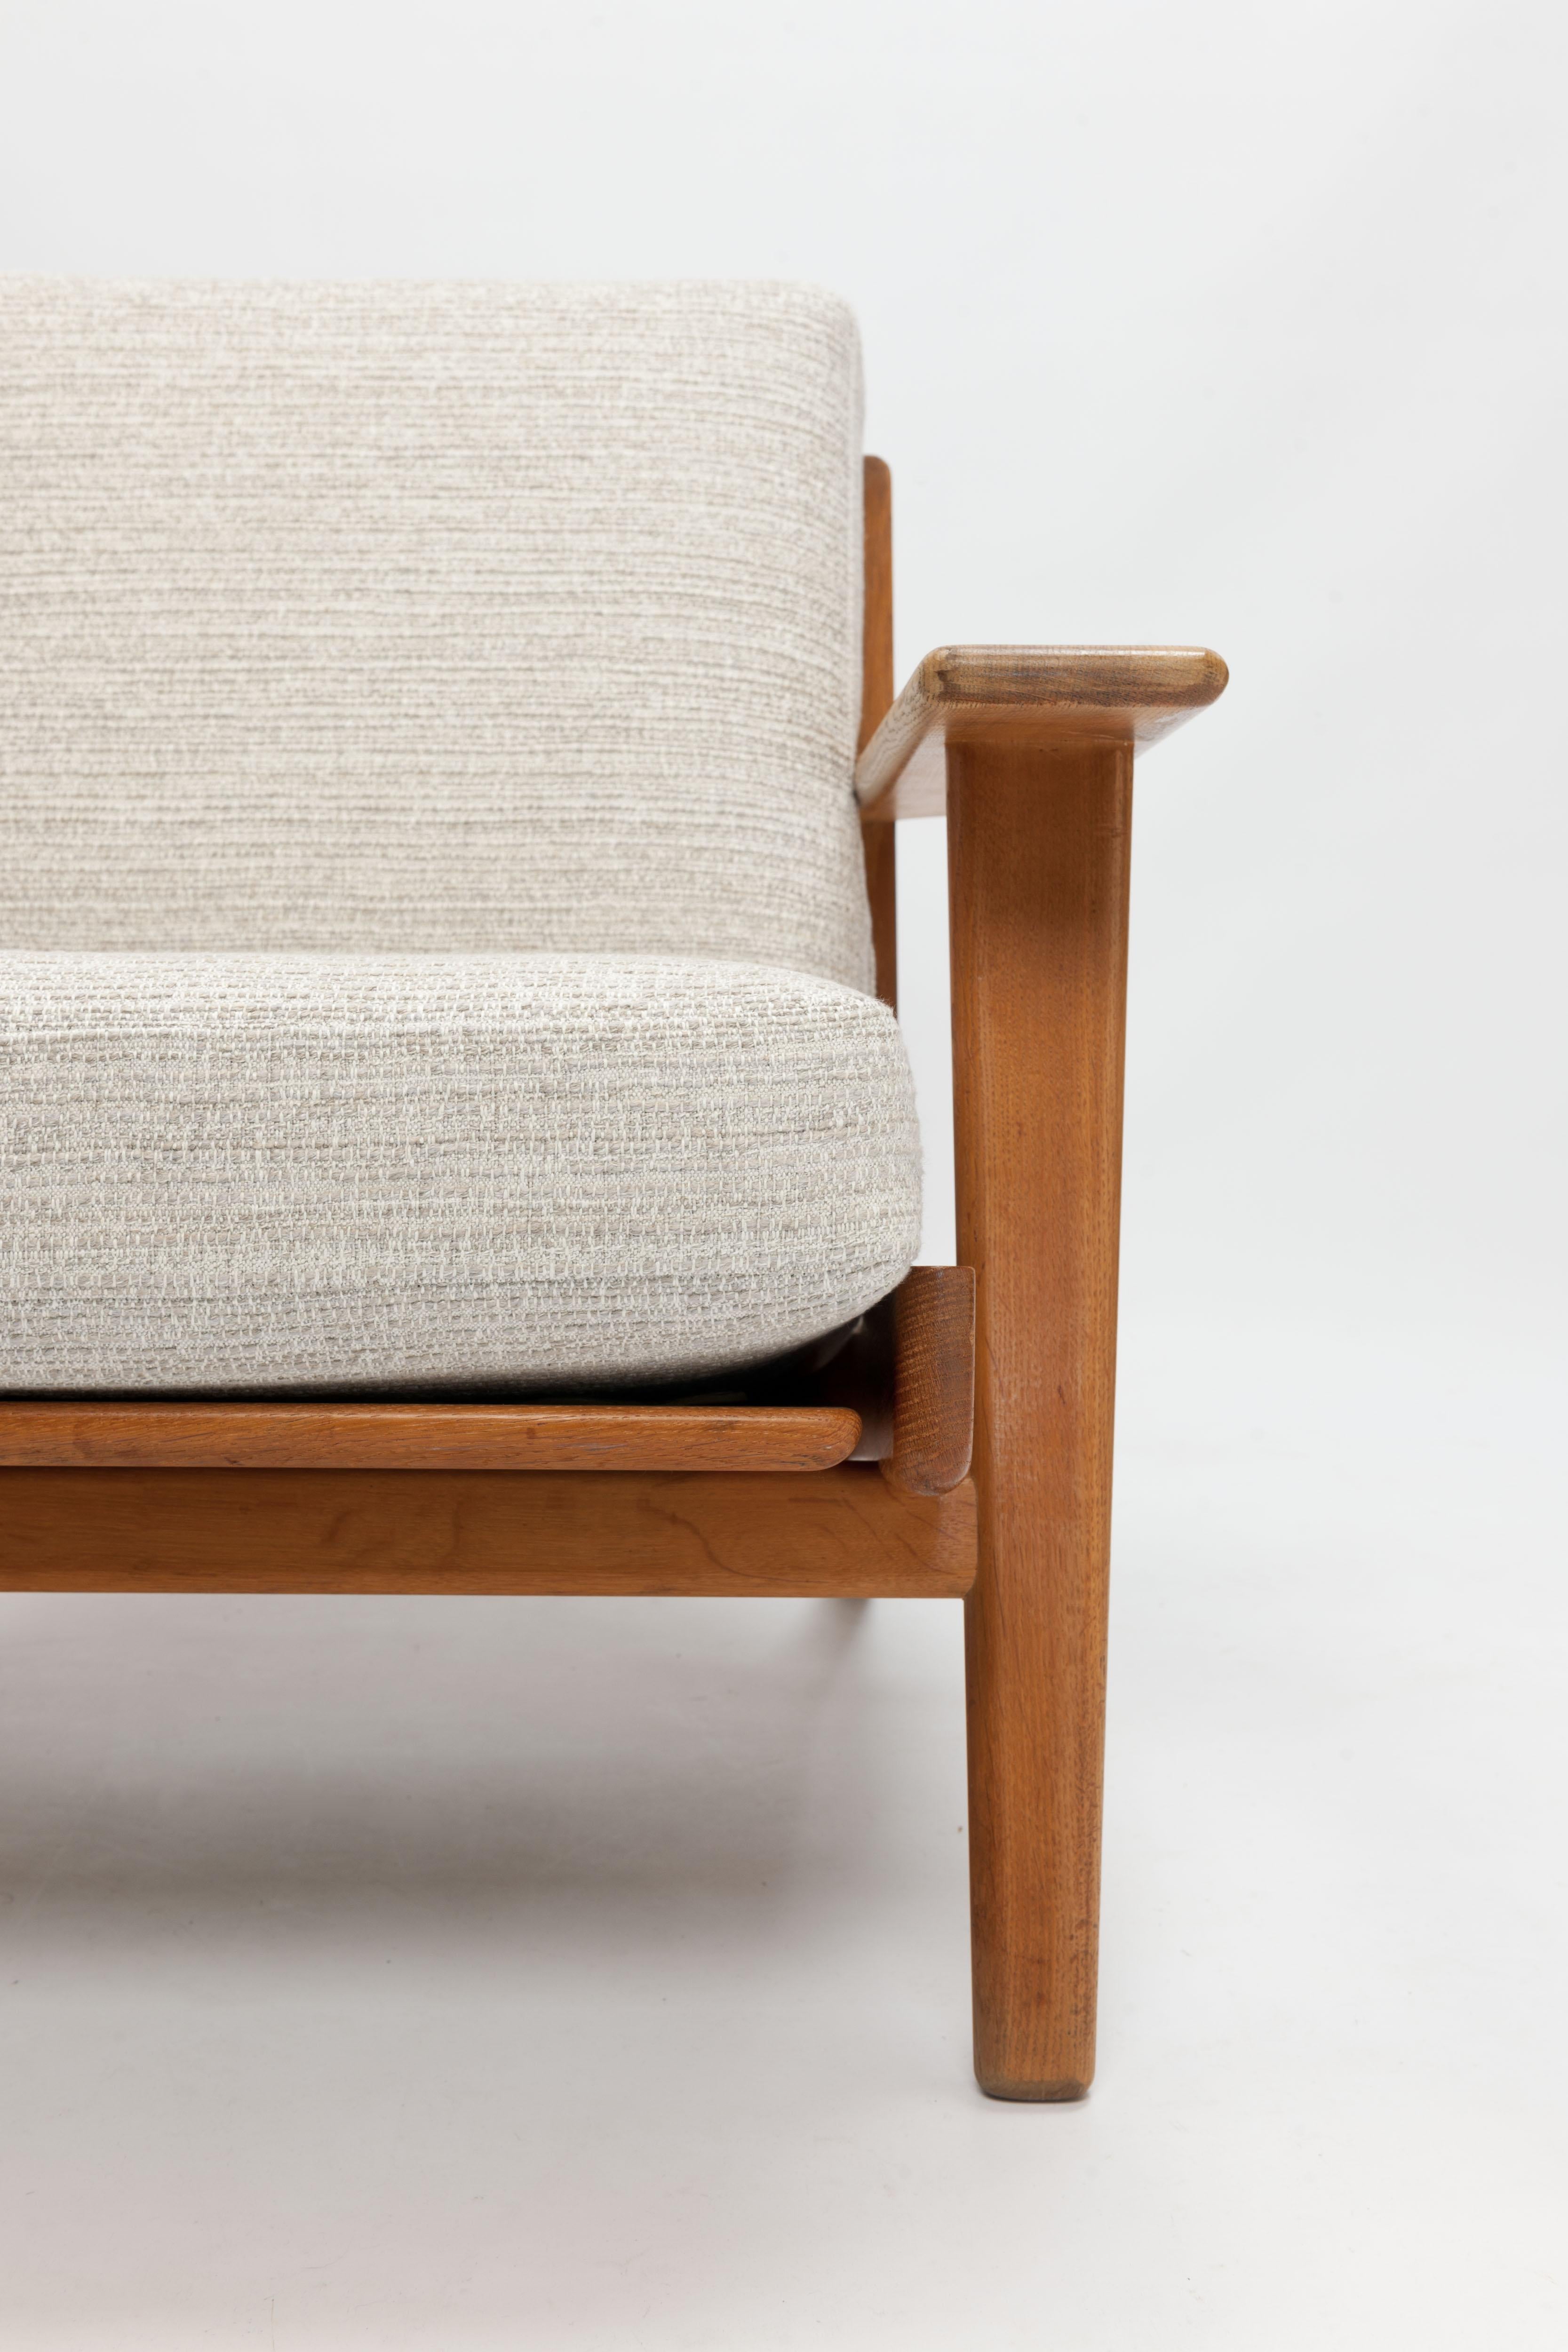 Scandinavian Modern Hans Wegner Oak Lounge Chair GE290 by GETAMA '1 of 3 Chairs'